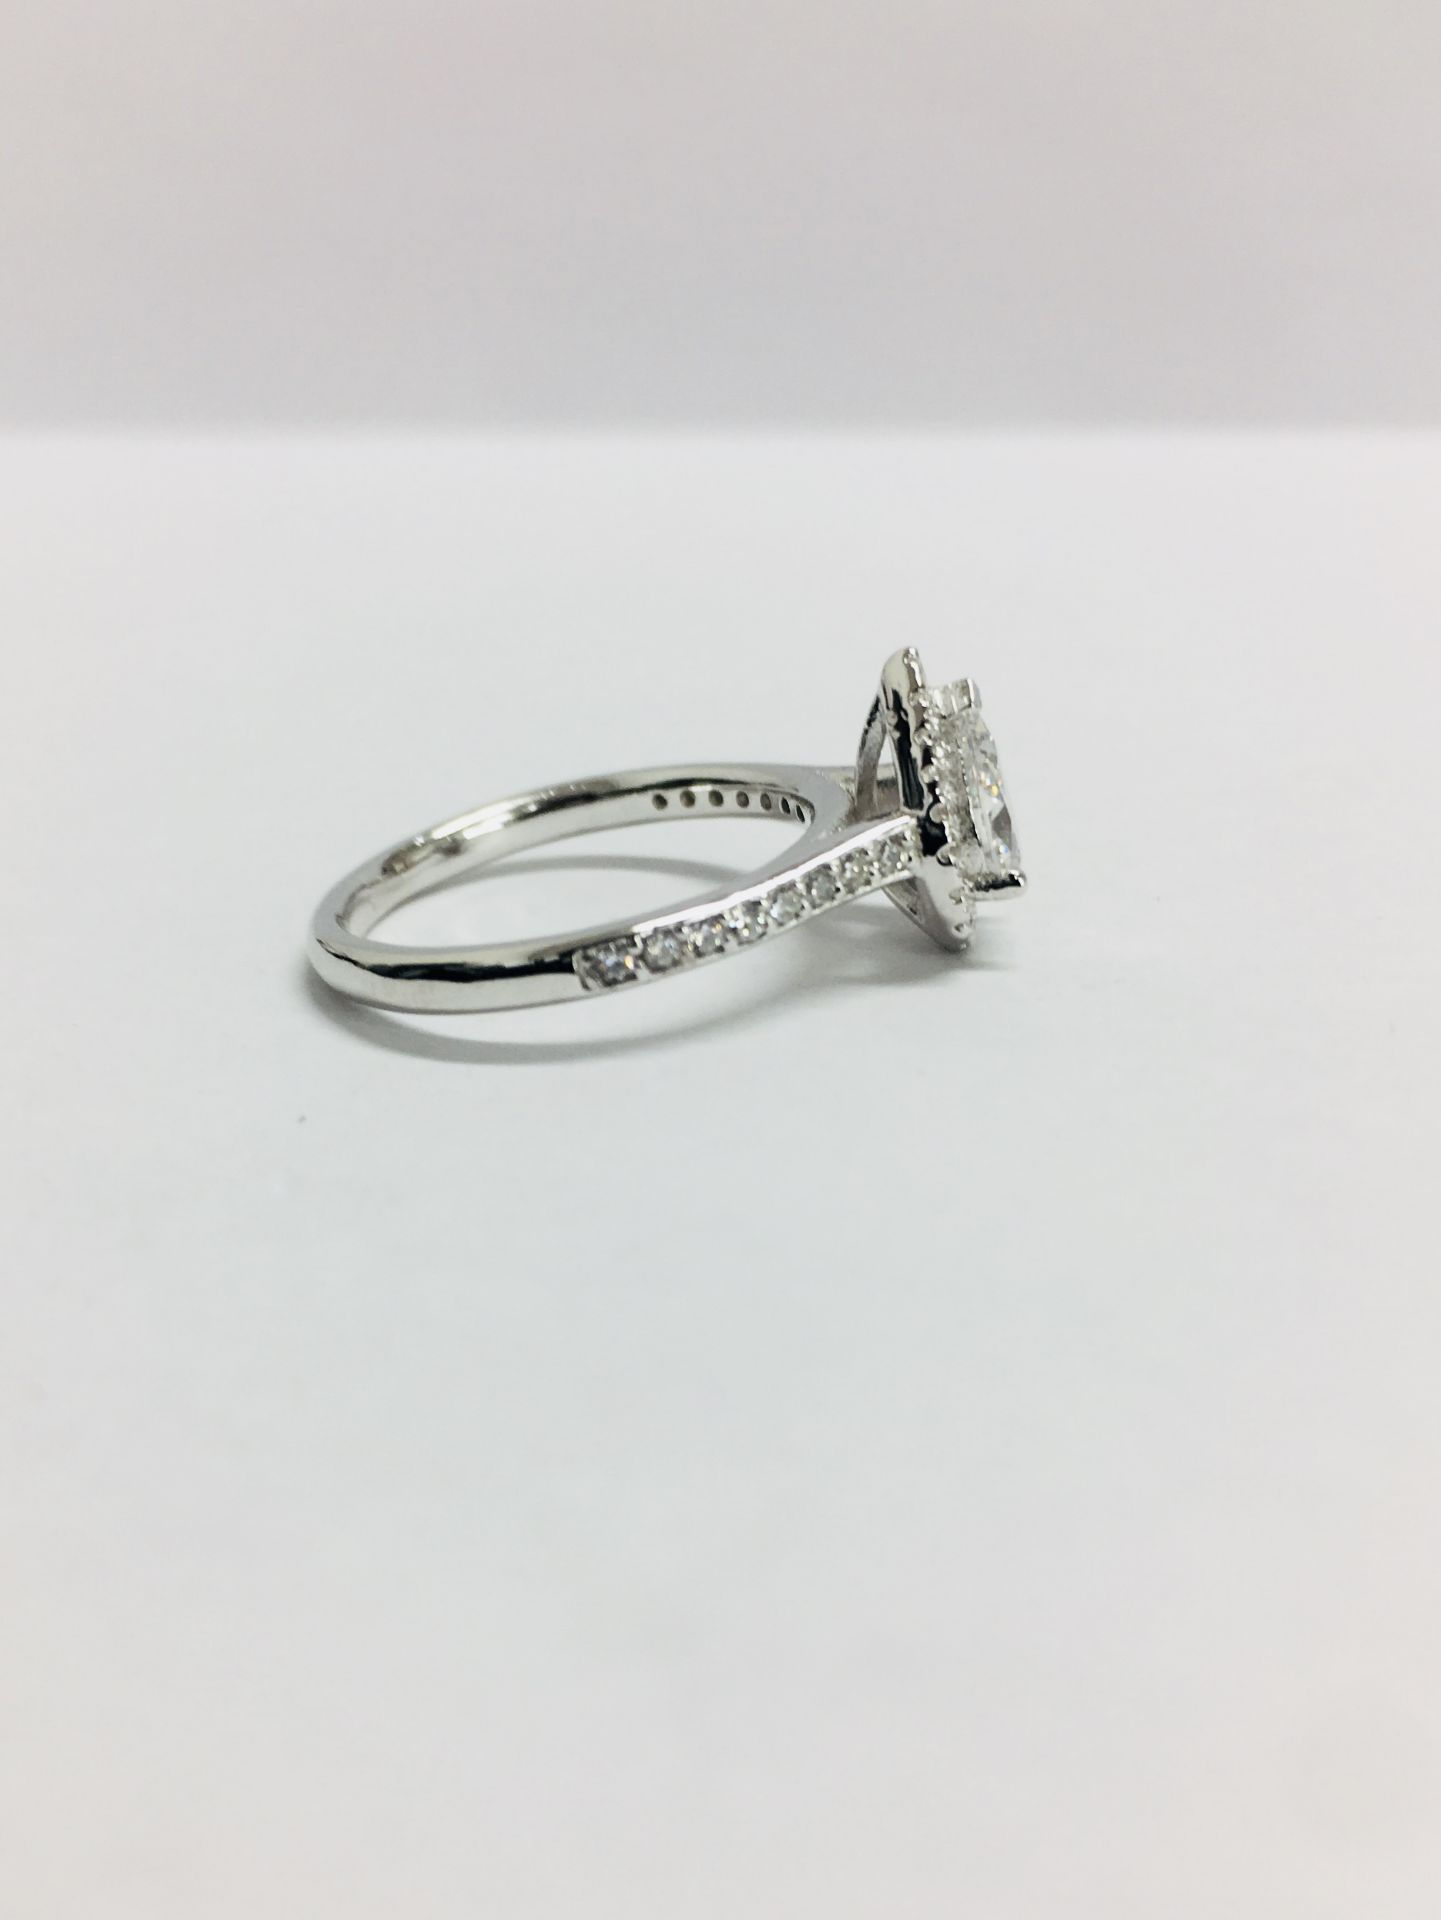 1ct pearshape Diamond Ring - Image 5 of 7